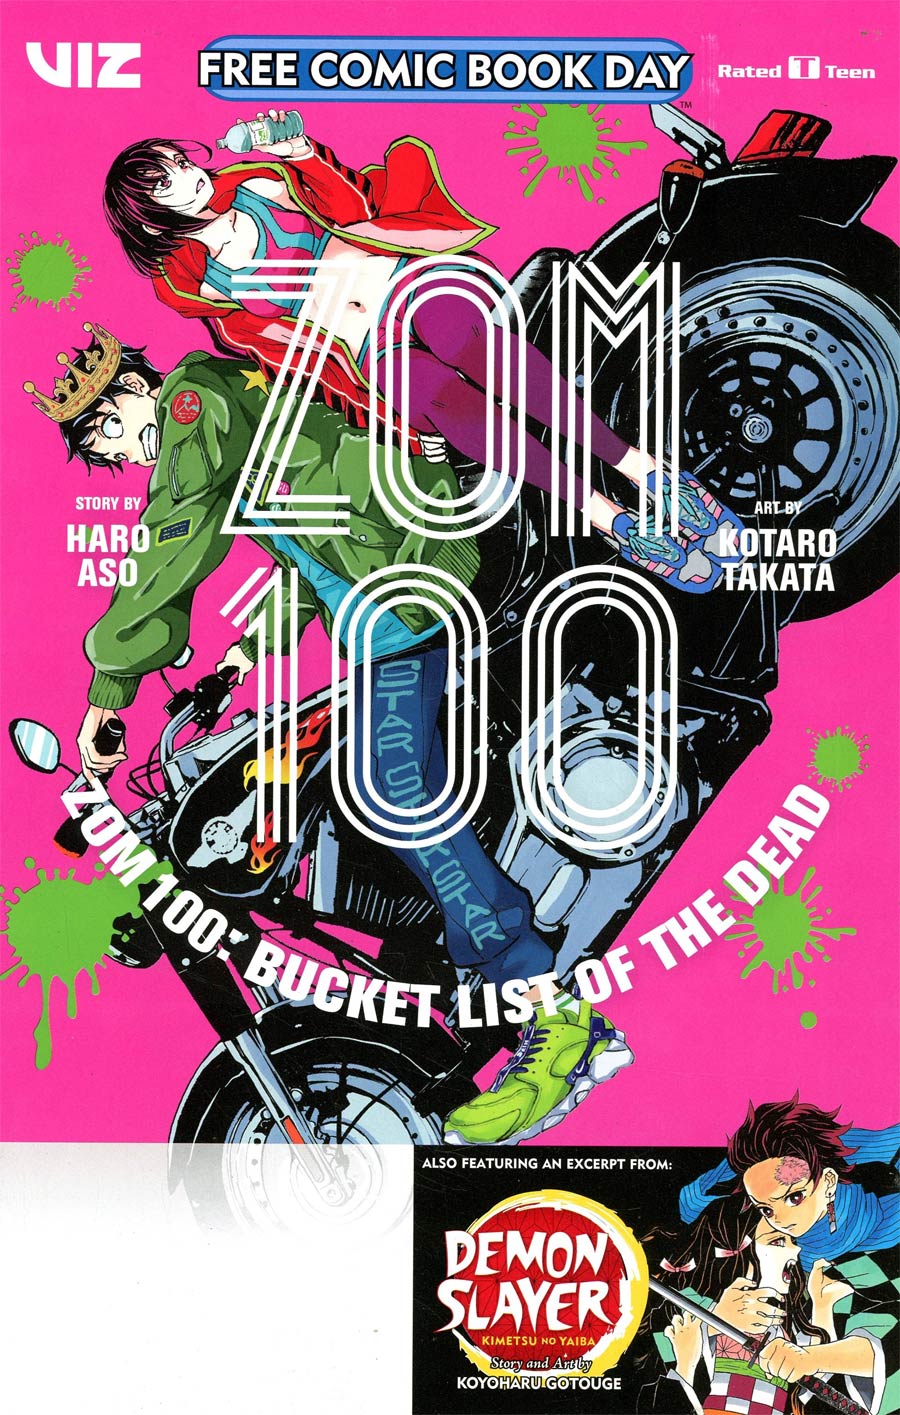 Zom 100 Bucket List Of The Dead / Demon Slayer Kimetsu No Yaiba FCBD 2021 Edition